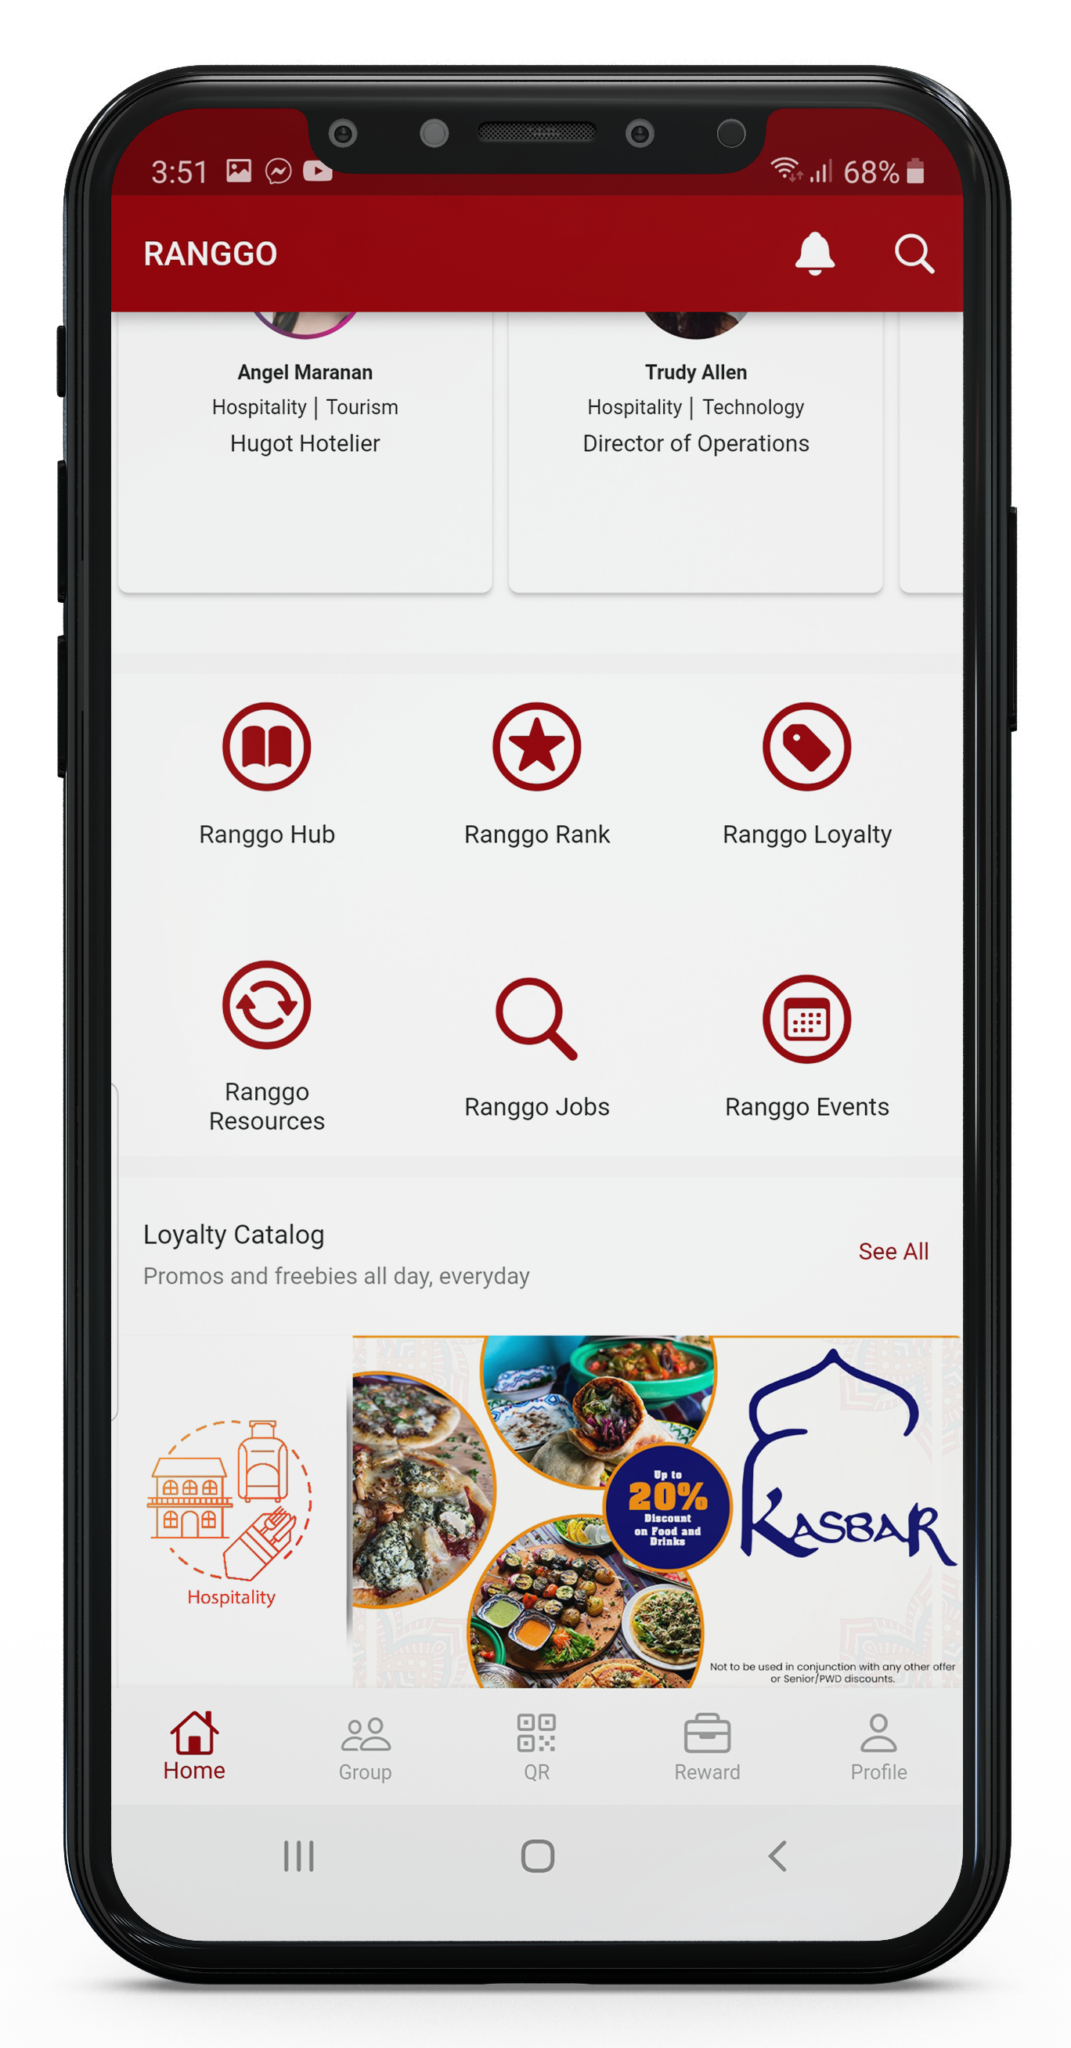 RANGGO App Home Page showing Features including RANGGO Rank